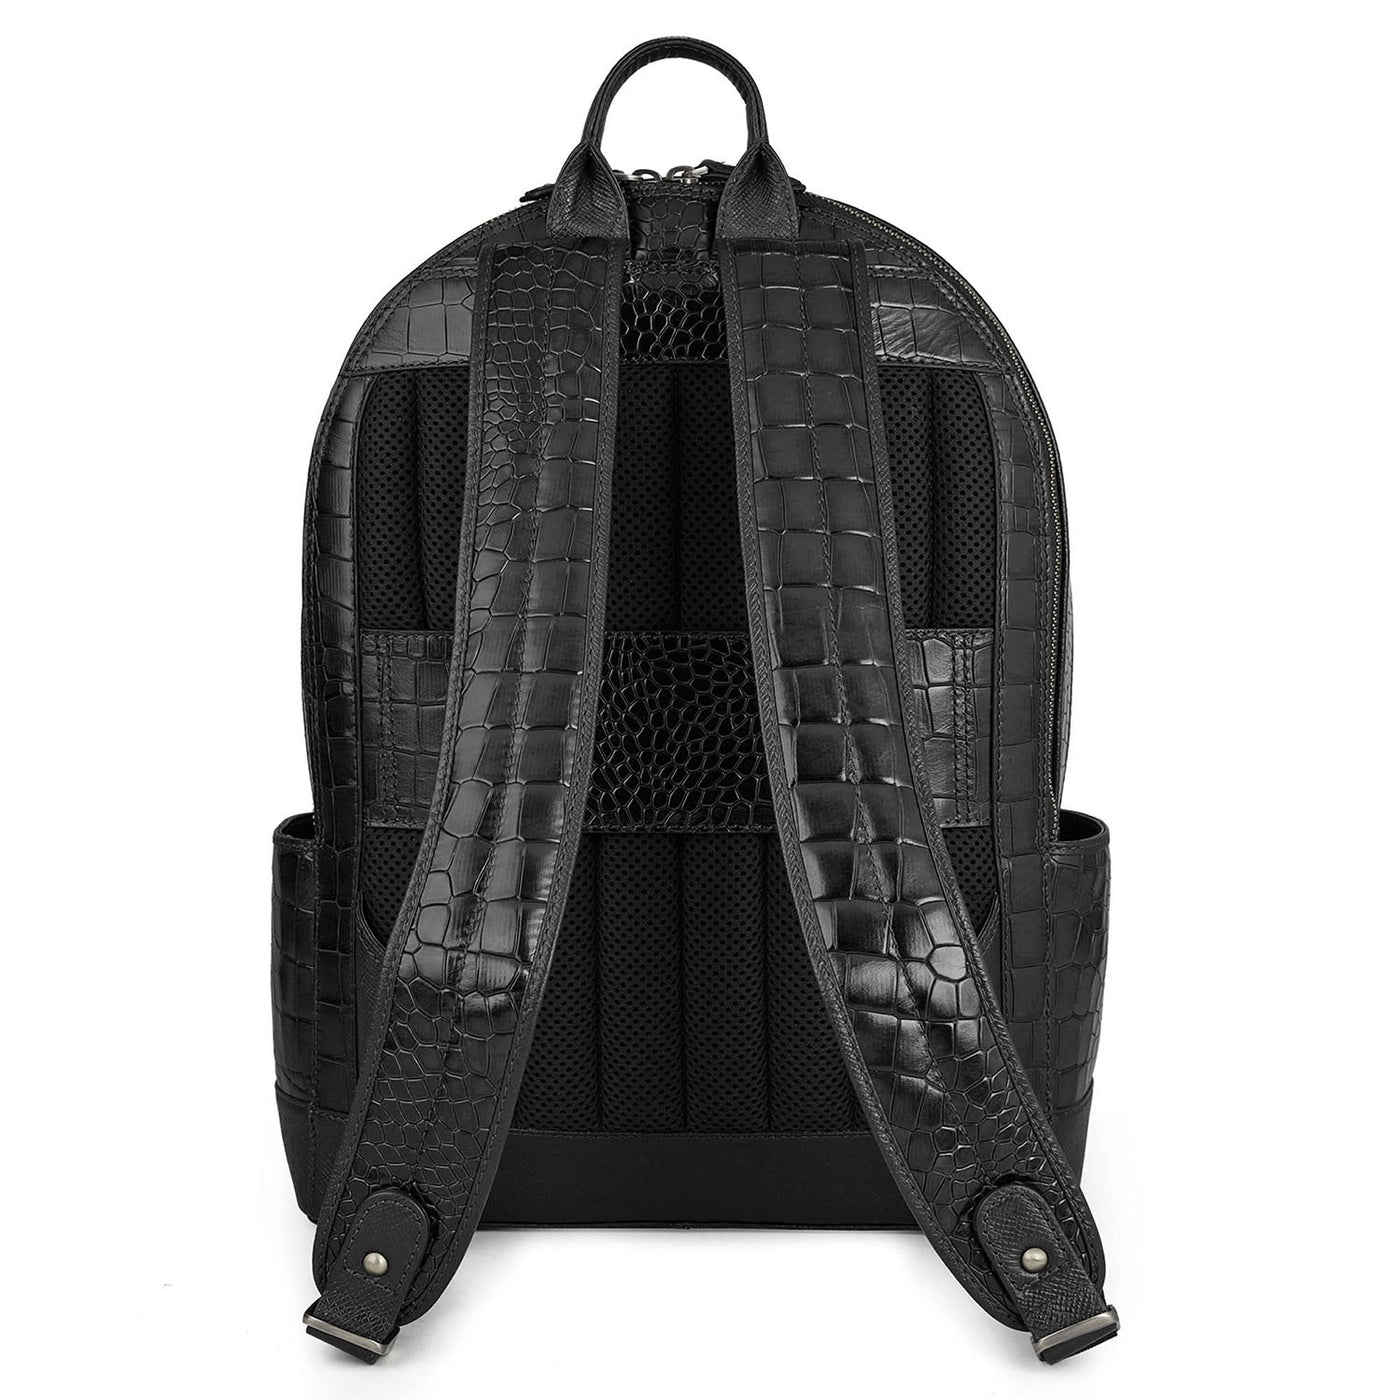 Croco Leather Backpack - Black